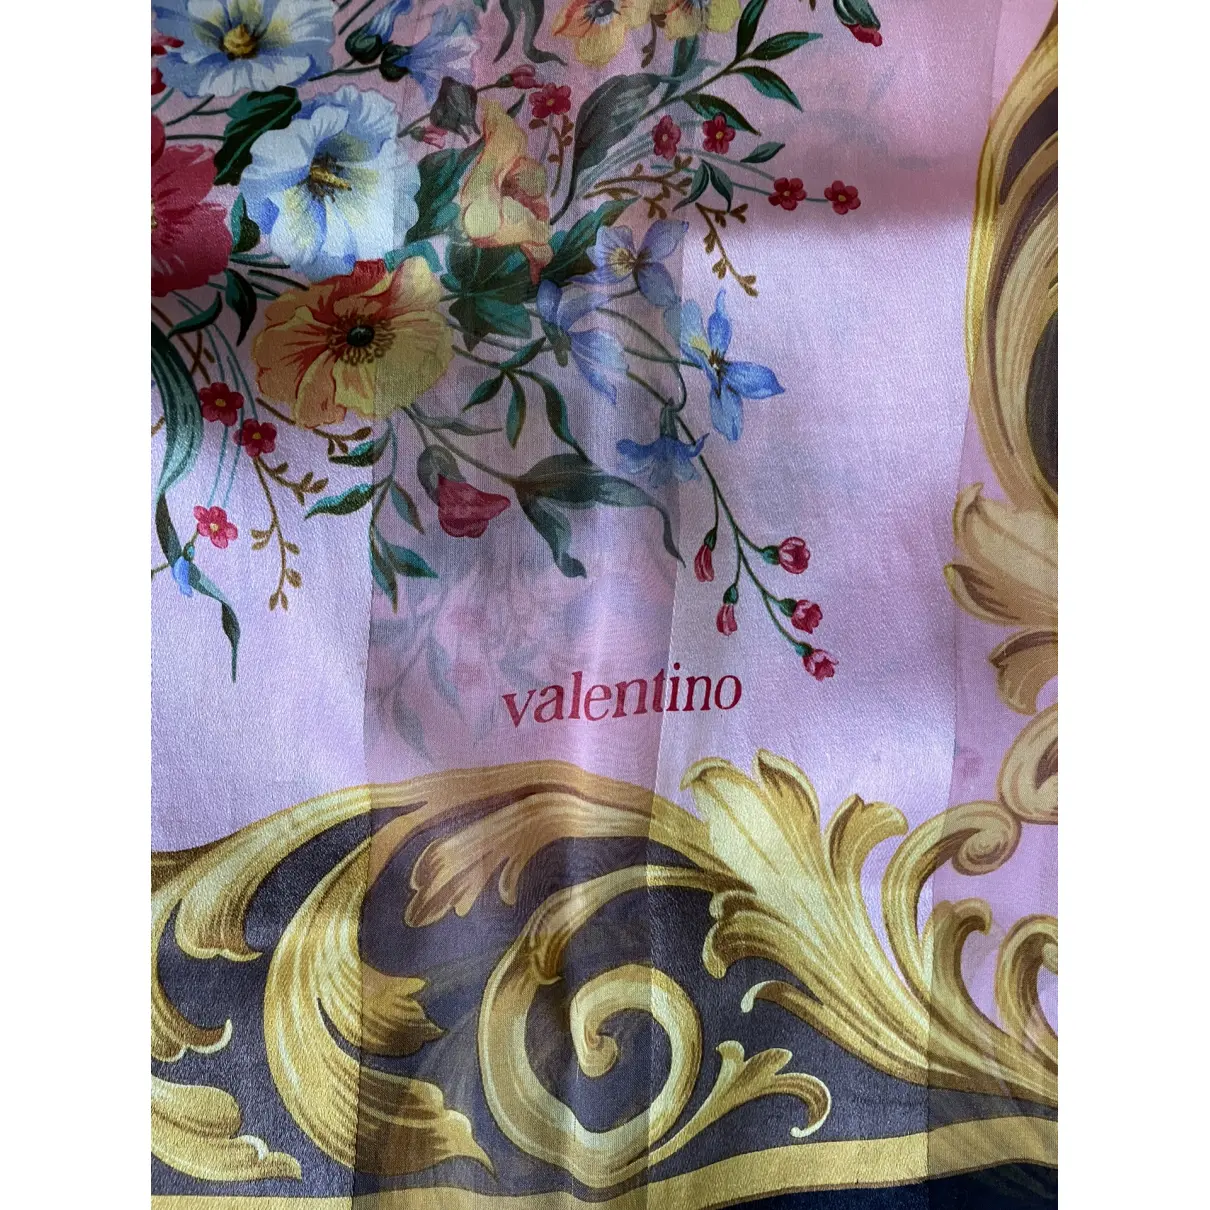 Buy Valentino Garavani Silk handkerchief online